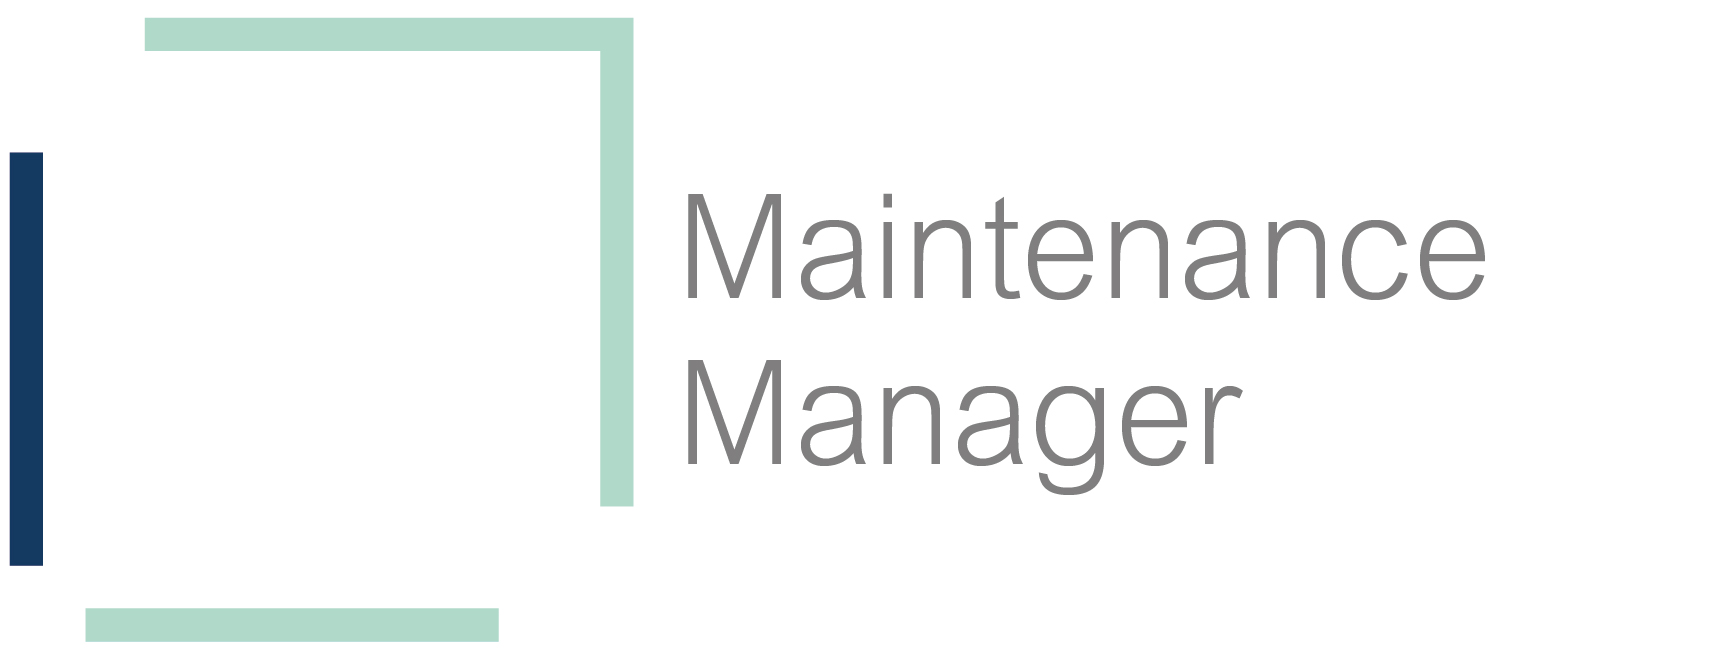 Alderley_Maintenance_Manager_Logo